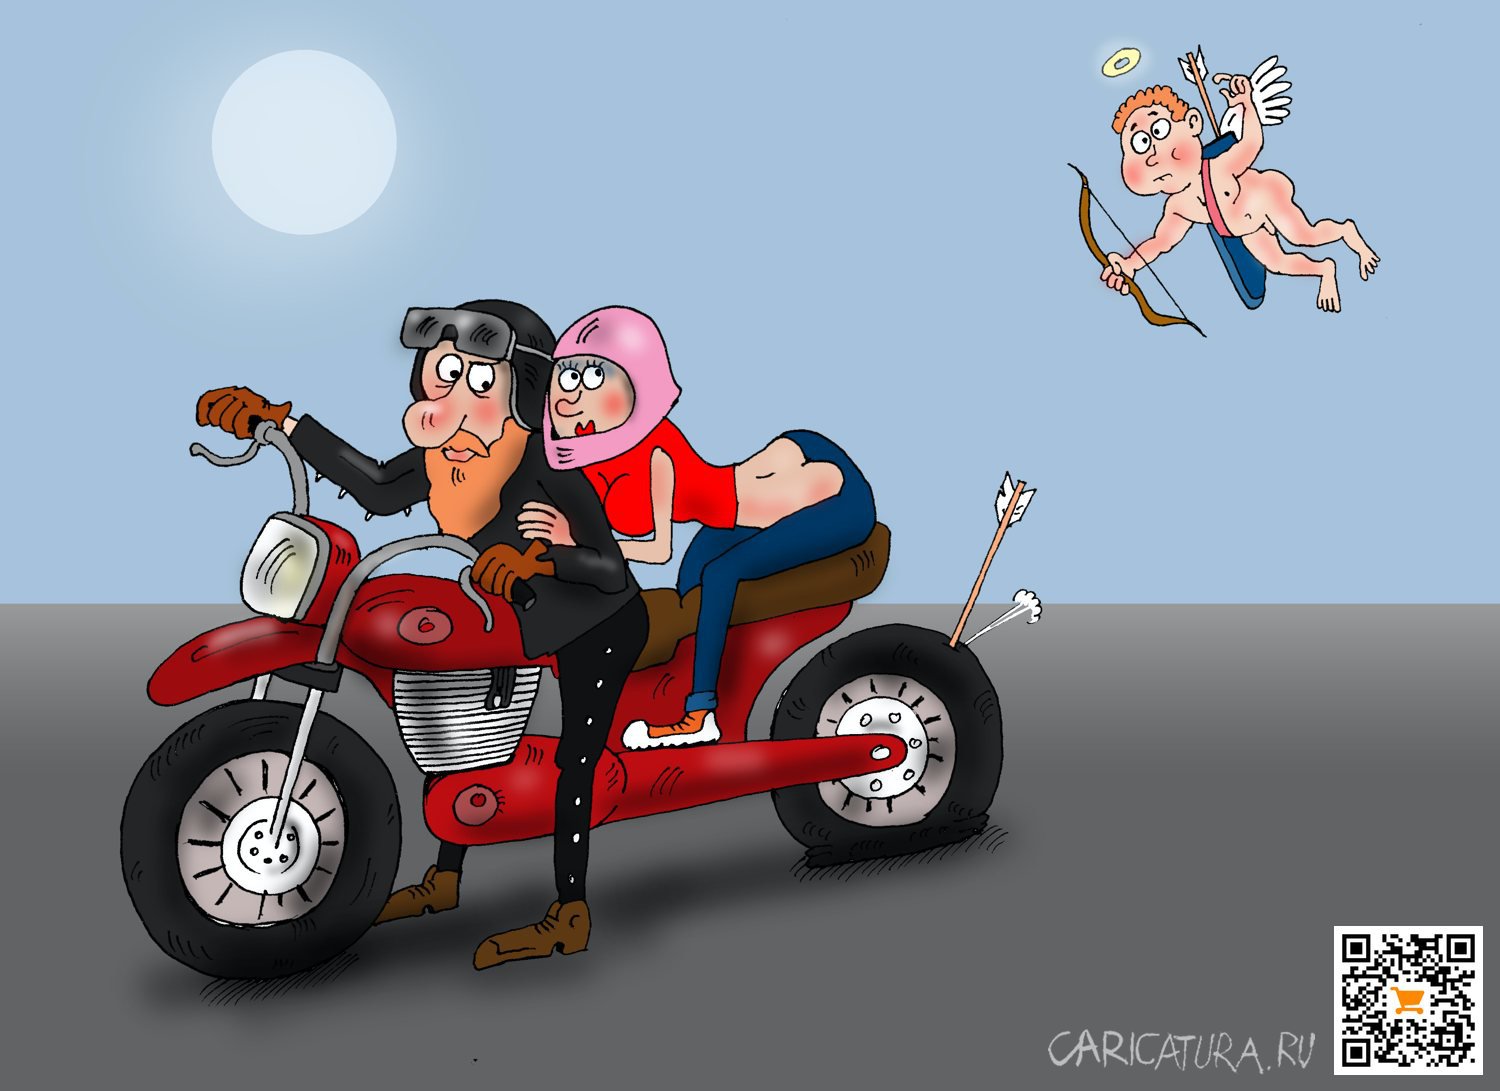 Карикатура "Скорость", Валерий Тарасенко